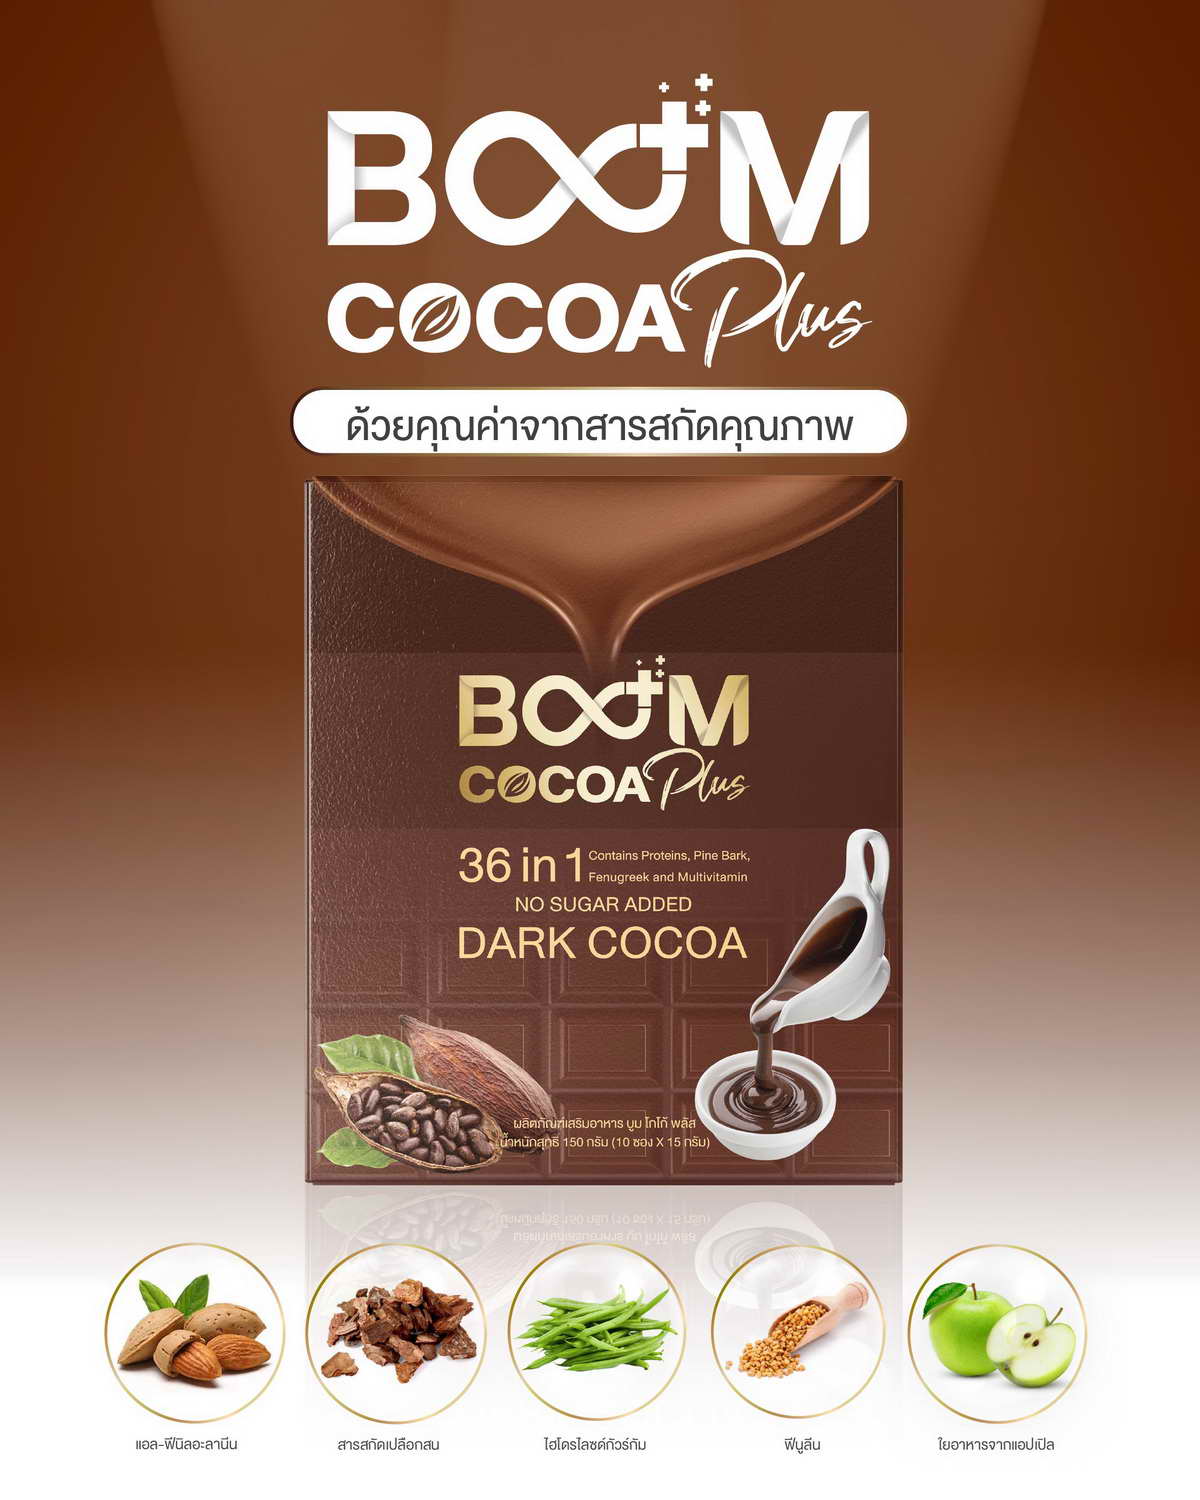 Boom Cocoa Plus ให้มากกว่าโกโก้ทั่วไป